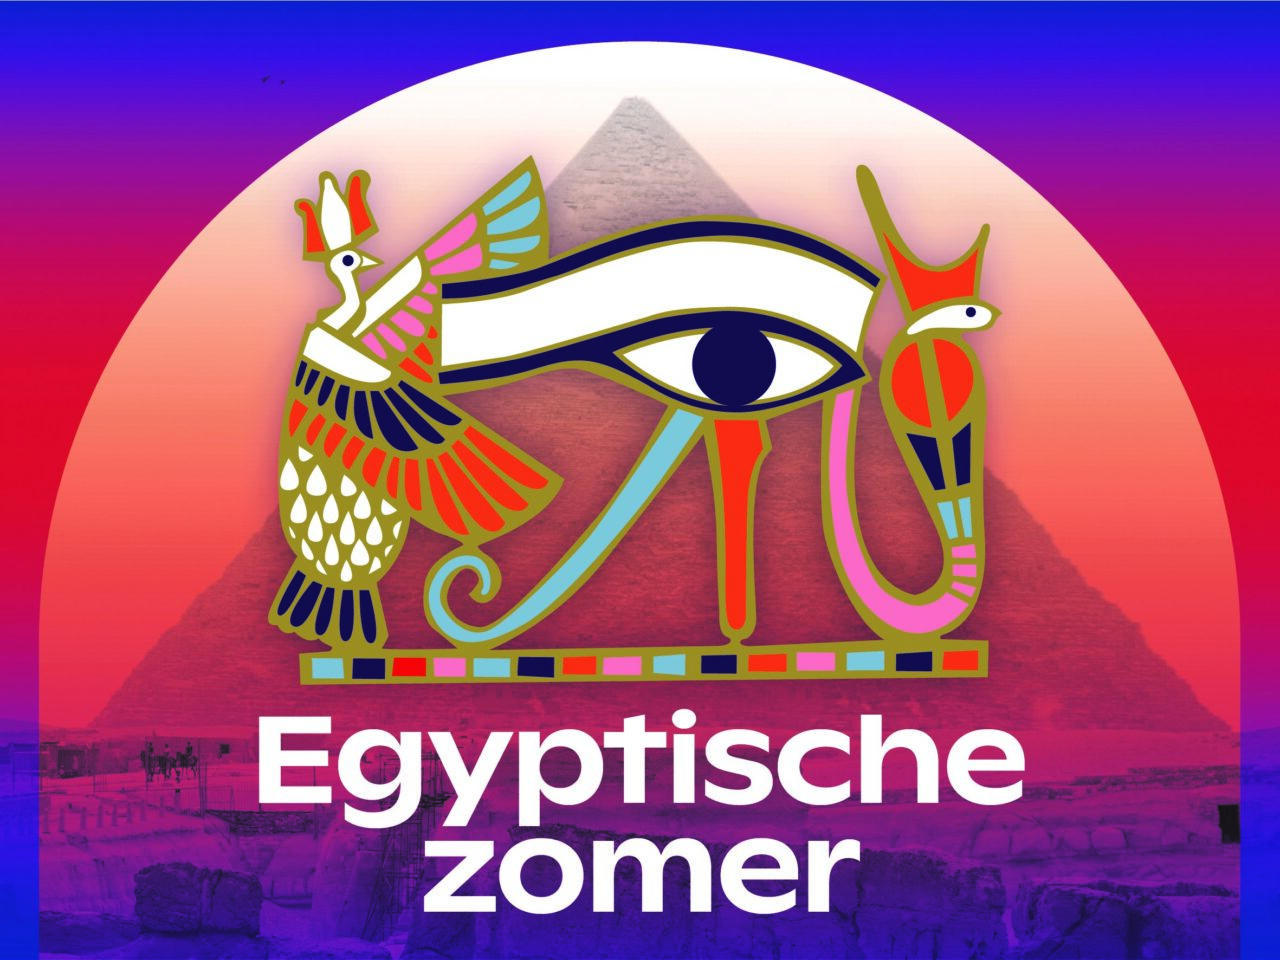 Egyptische zomervakantie